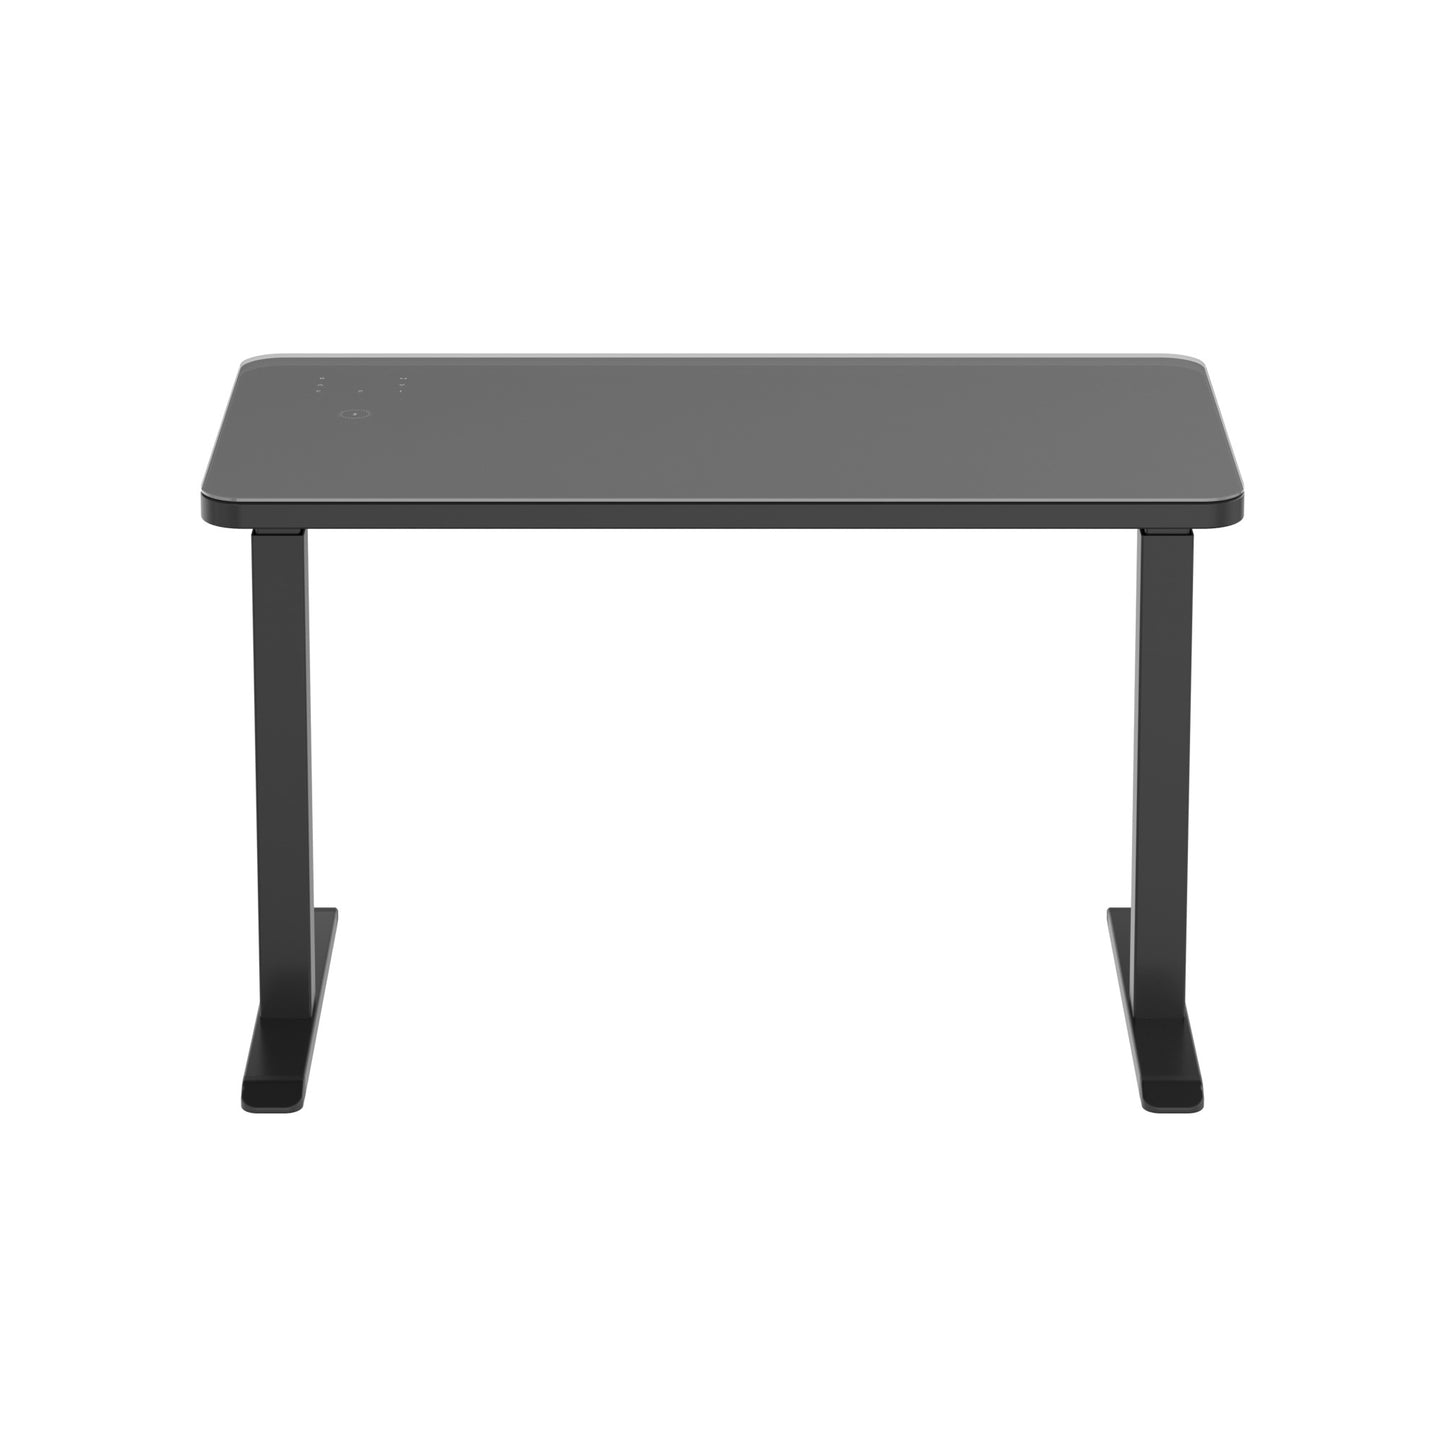 Glass tabletop standing desk
Black